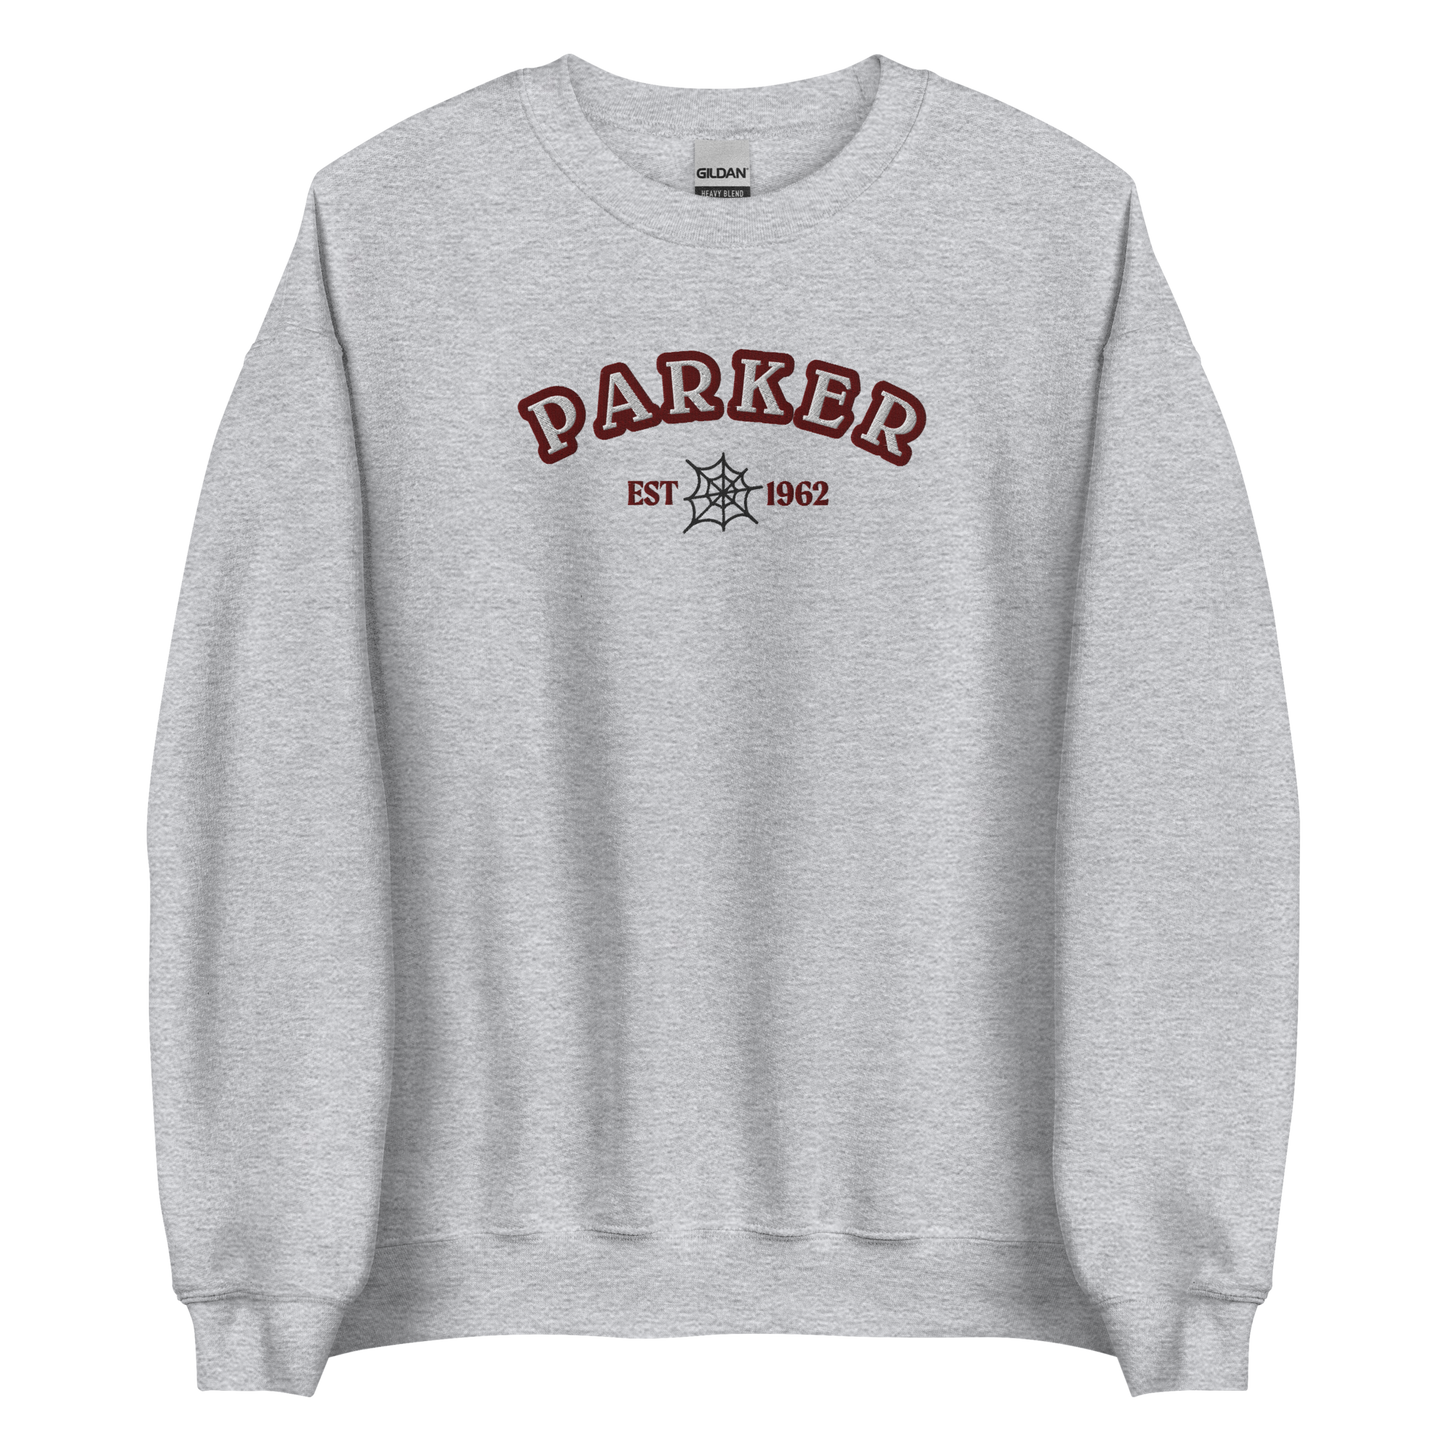 Parker Sweatshirt